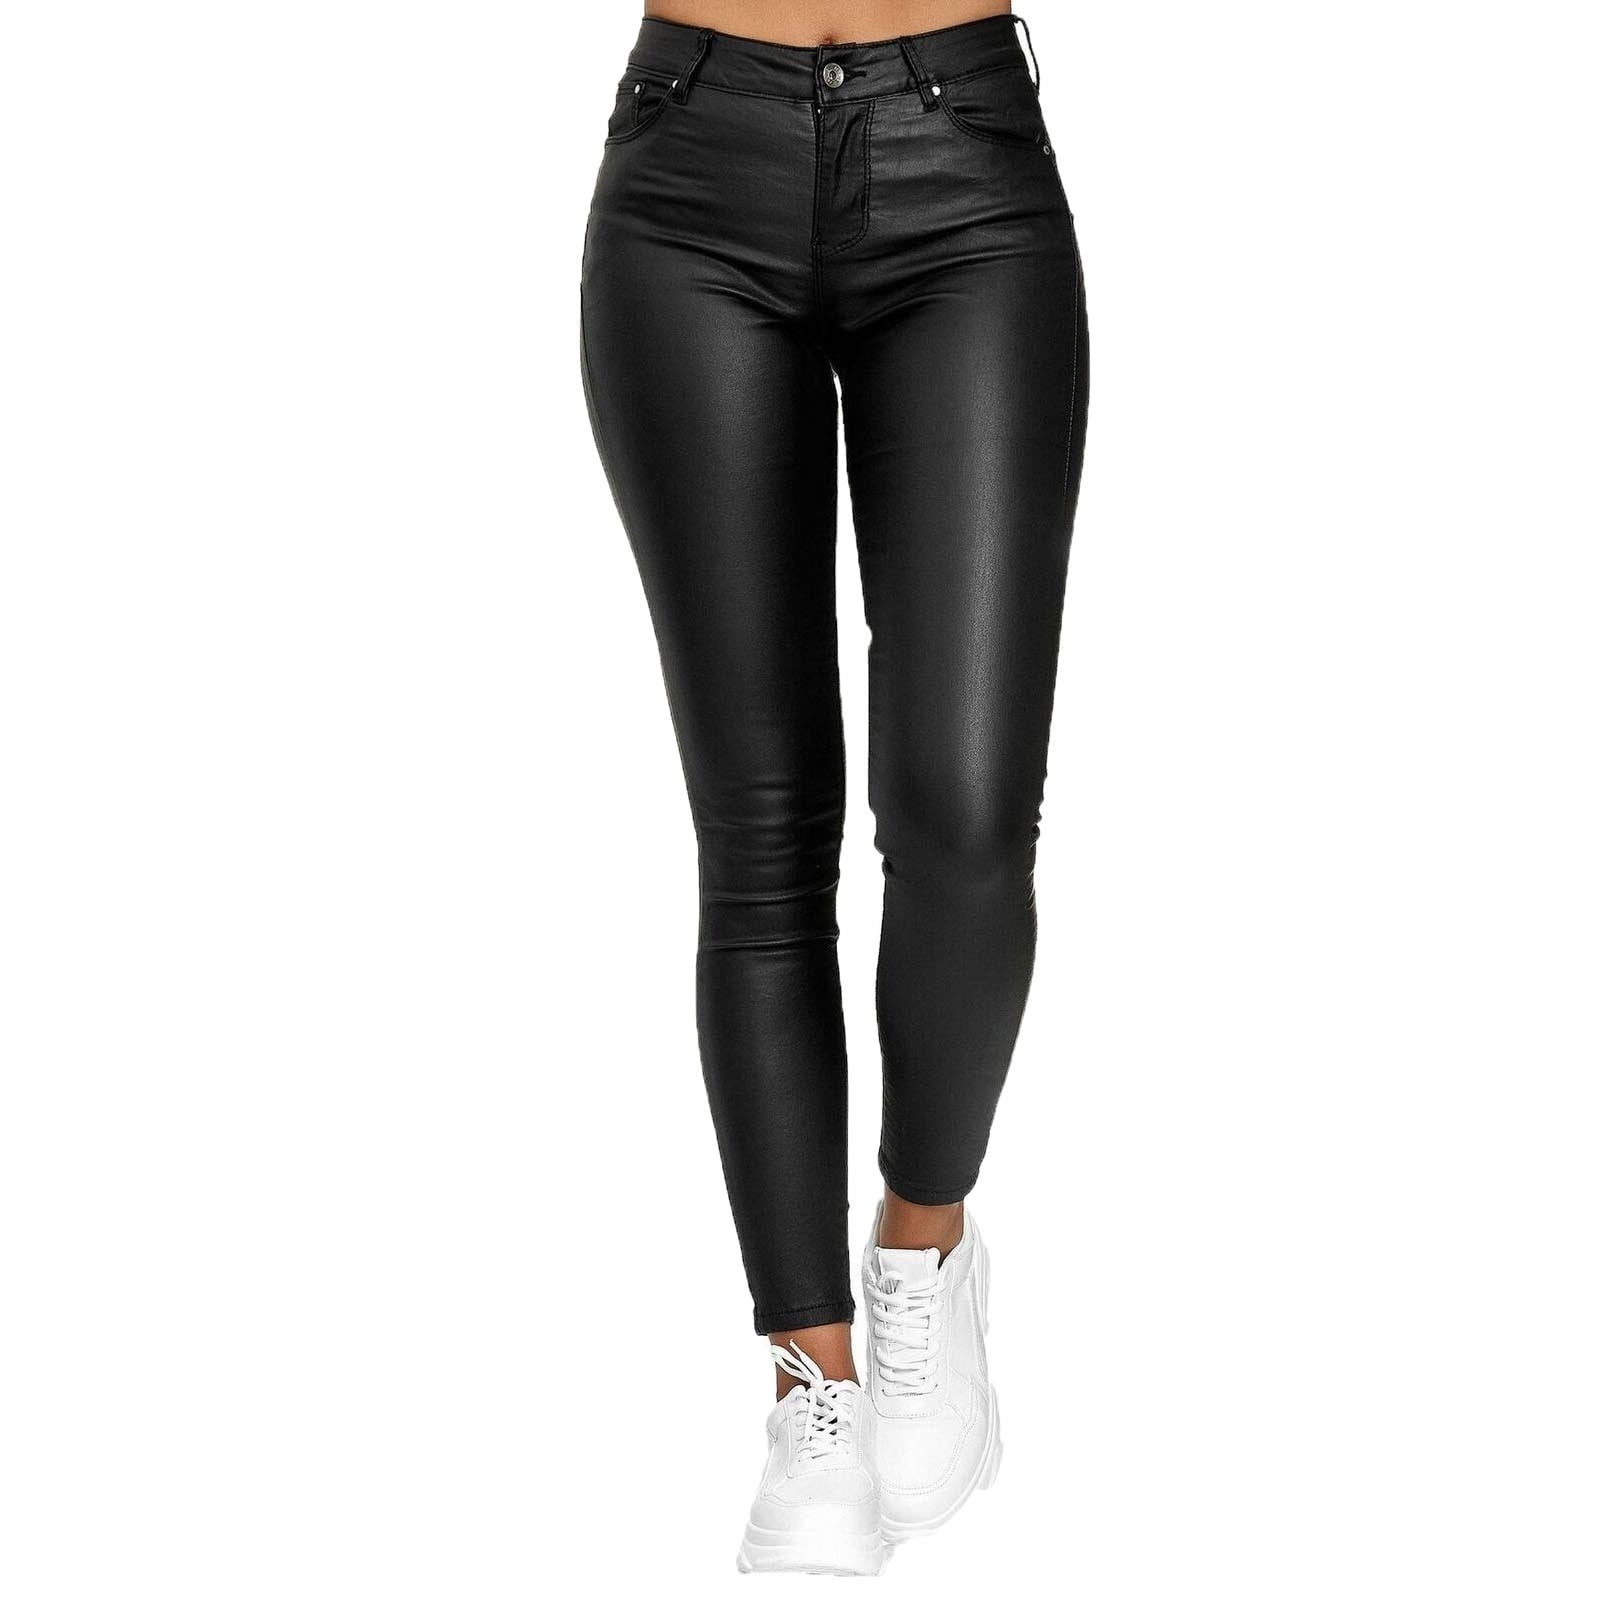 Mrat Womens Plus Size Pants Full Length Pants Fashion Ladies Solid Casual  Pockets Button High Waist Faux Leather Long Pants Black Dress Pants Female  Black XL 